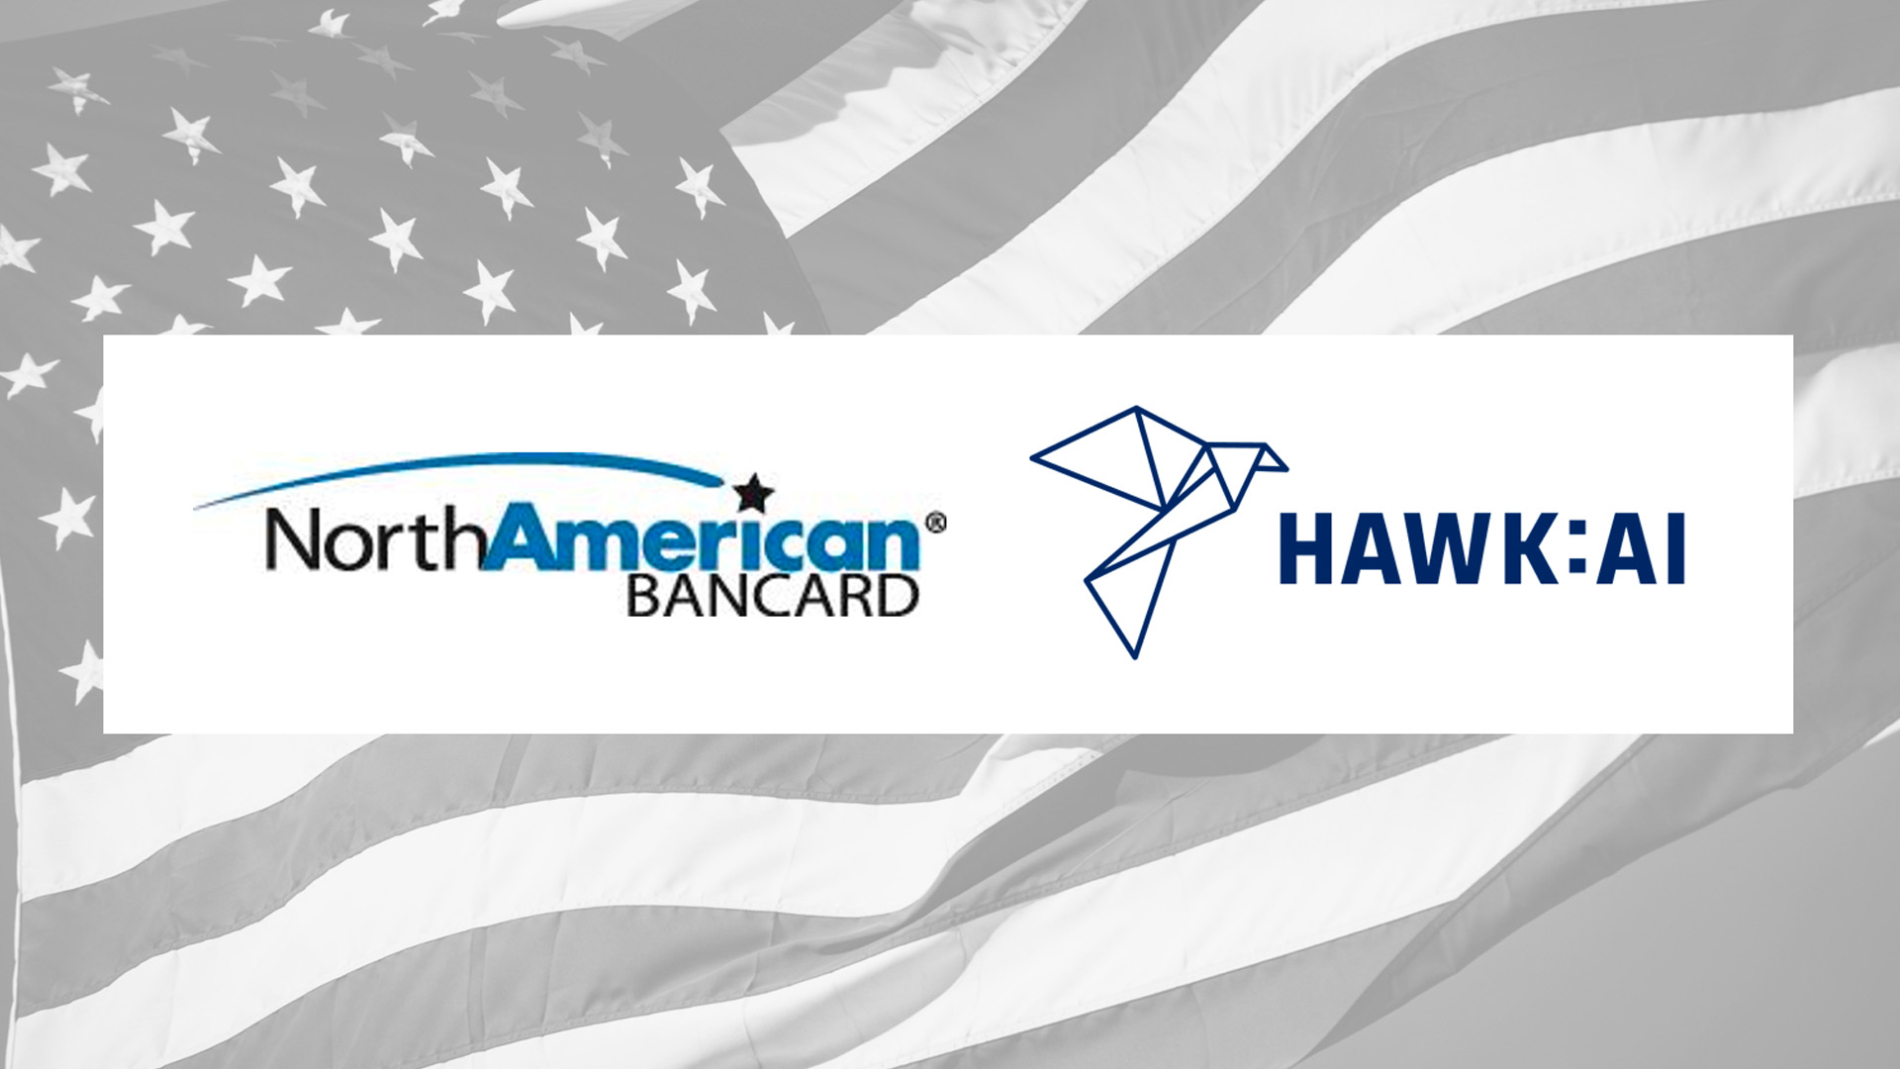 Partnership with North American Bankcard